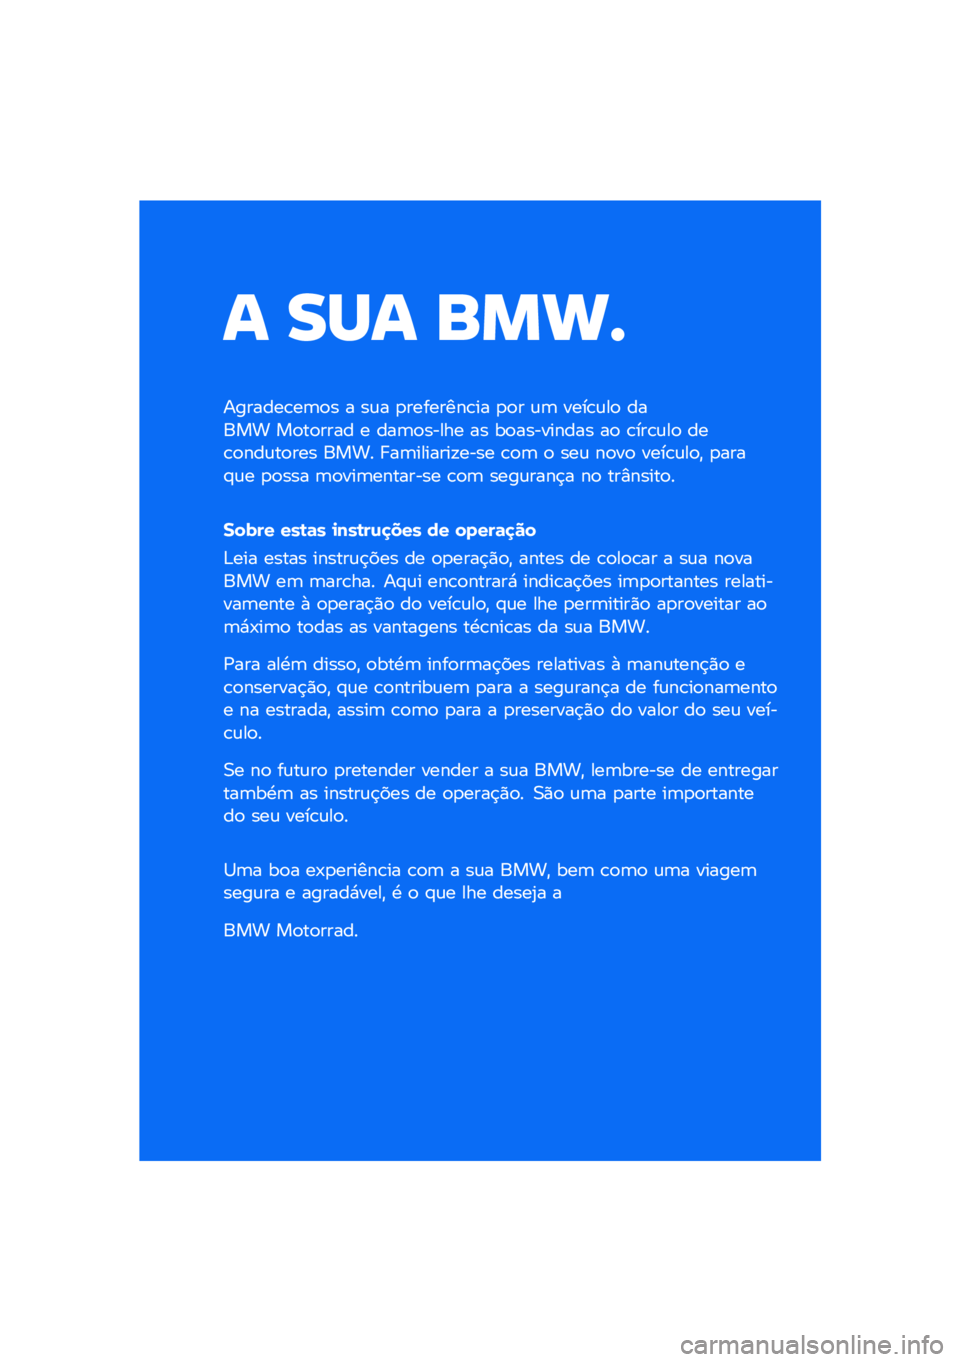 BMW MOTORRAD R NINE T URVAN G/S 2020  Manual do condutor (in Portuguese) � ��� ����\b
�������\b��	�
� � ��\f� �
��������\b�� �
�
� �\f�	 ����\b�\f��
 ����� ��
��
���� � ���	�
����� �� ��
��������� ��
 �\b���